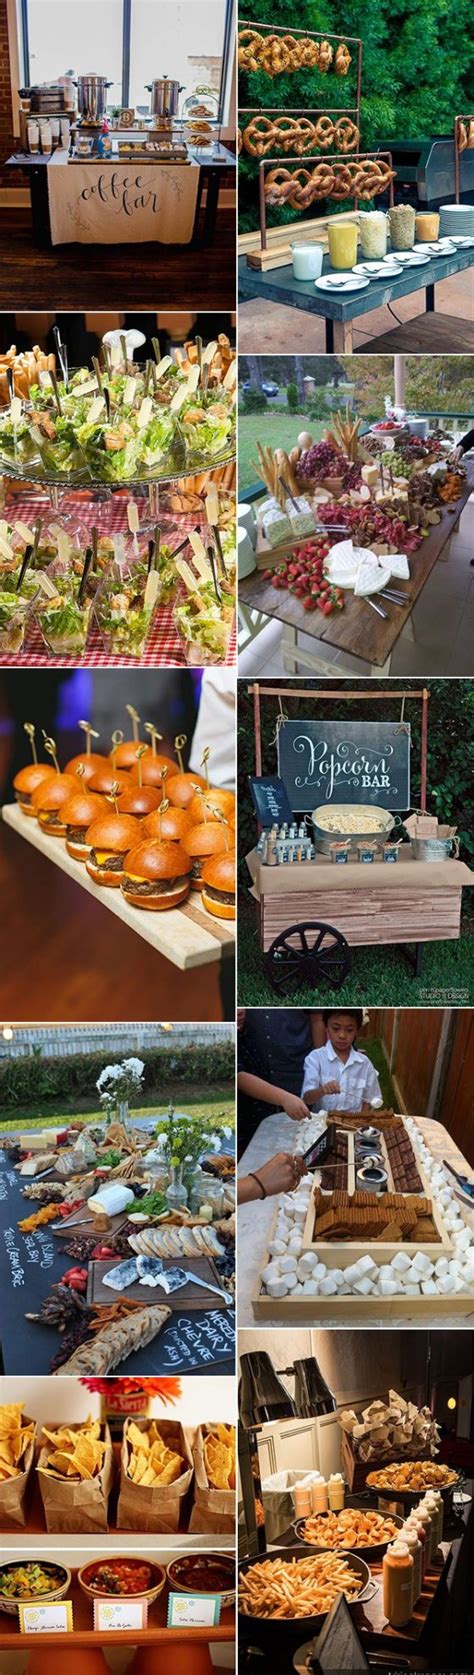 20 Great Wedding Food Station Ideas For Your Reception Emmalovesweddings